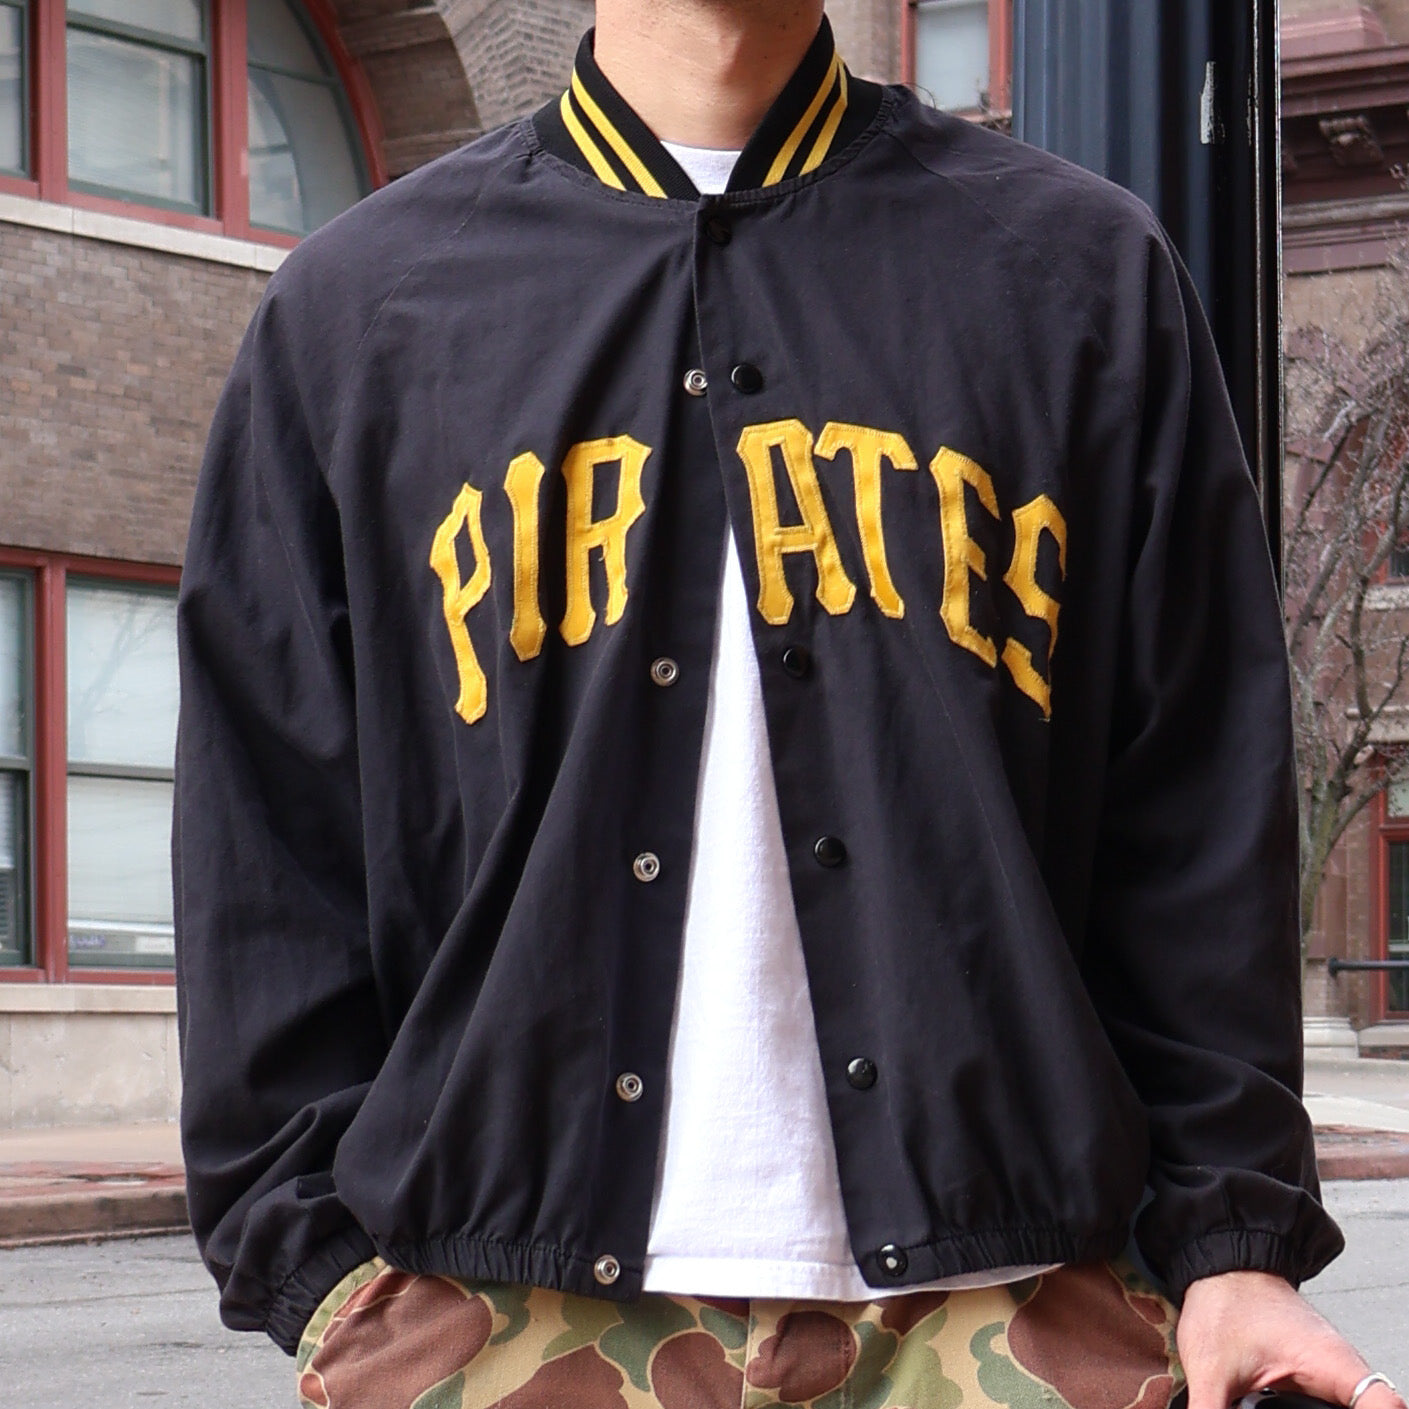 Pittsburgh Pirates 90s Bomber Jacket (Large)